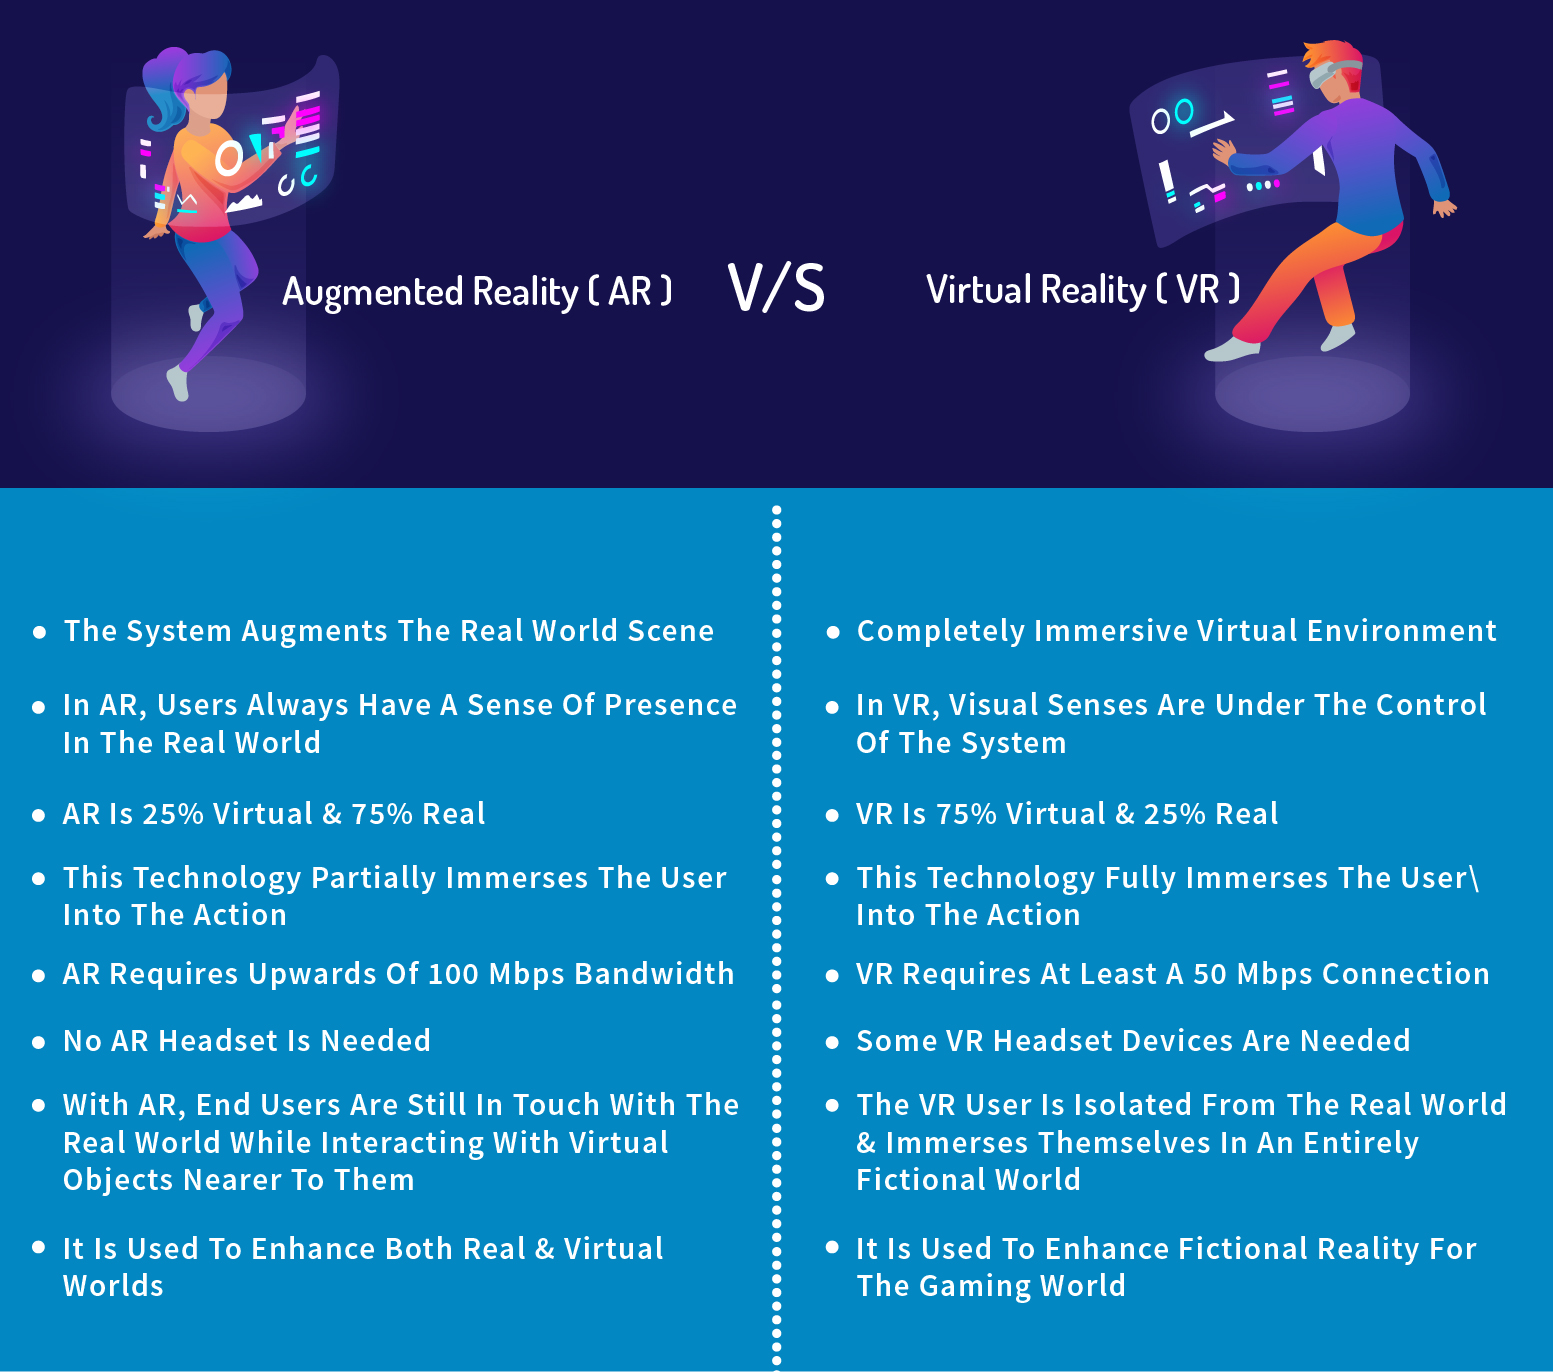 Augmented Reality (AR) vs. Virtual Reality (VR)